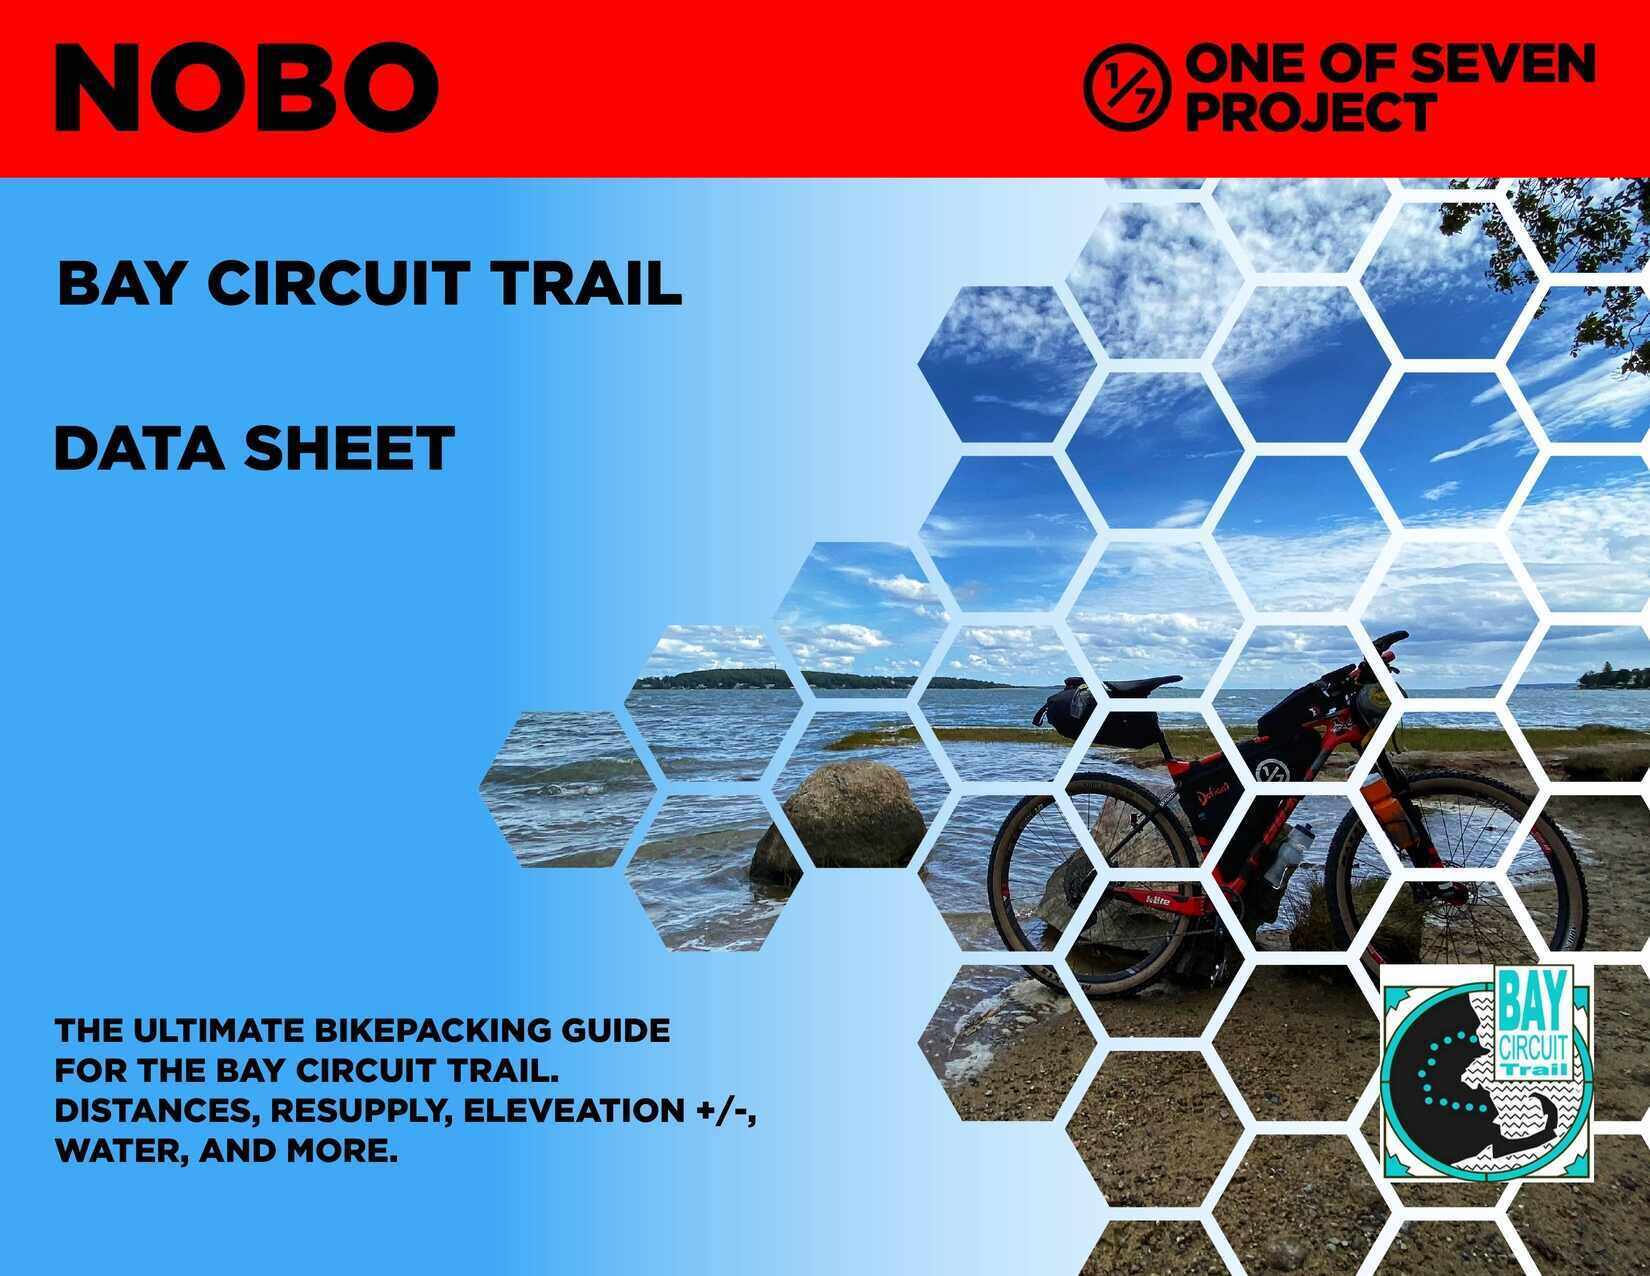 NOBO Data Sheet Cover- Bay Circuit Trail bikeepacking guide planning aids